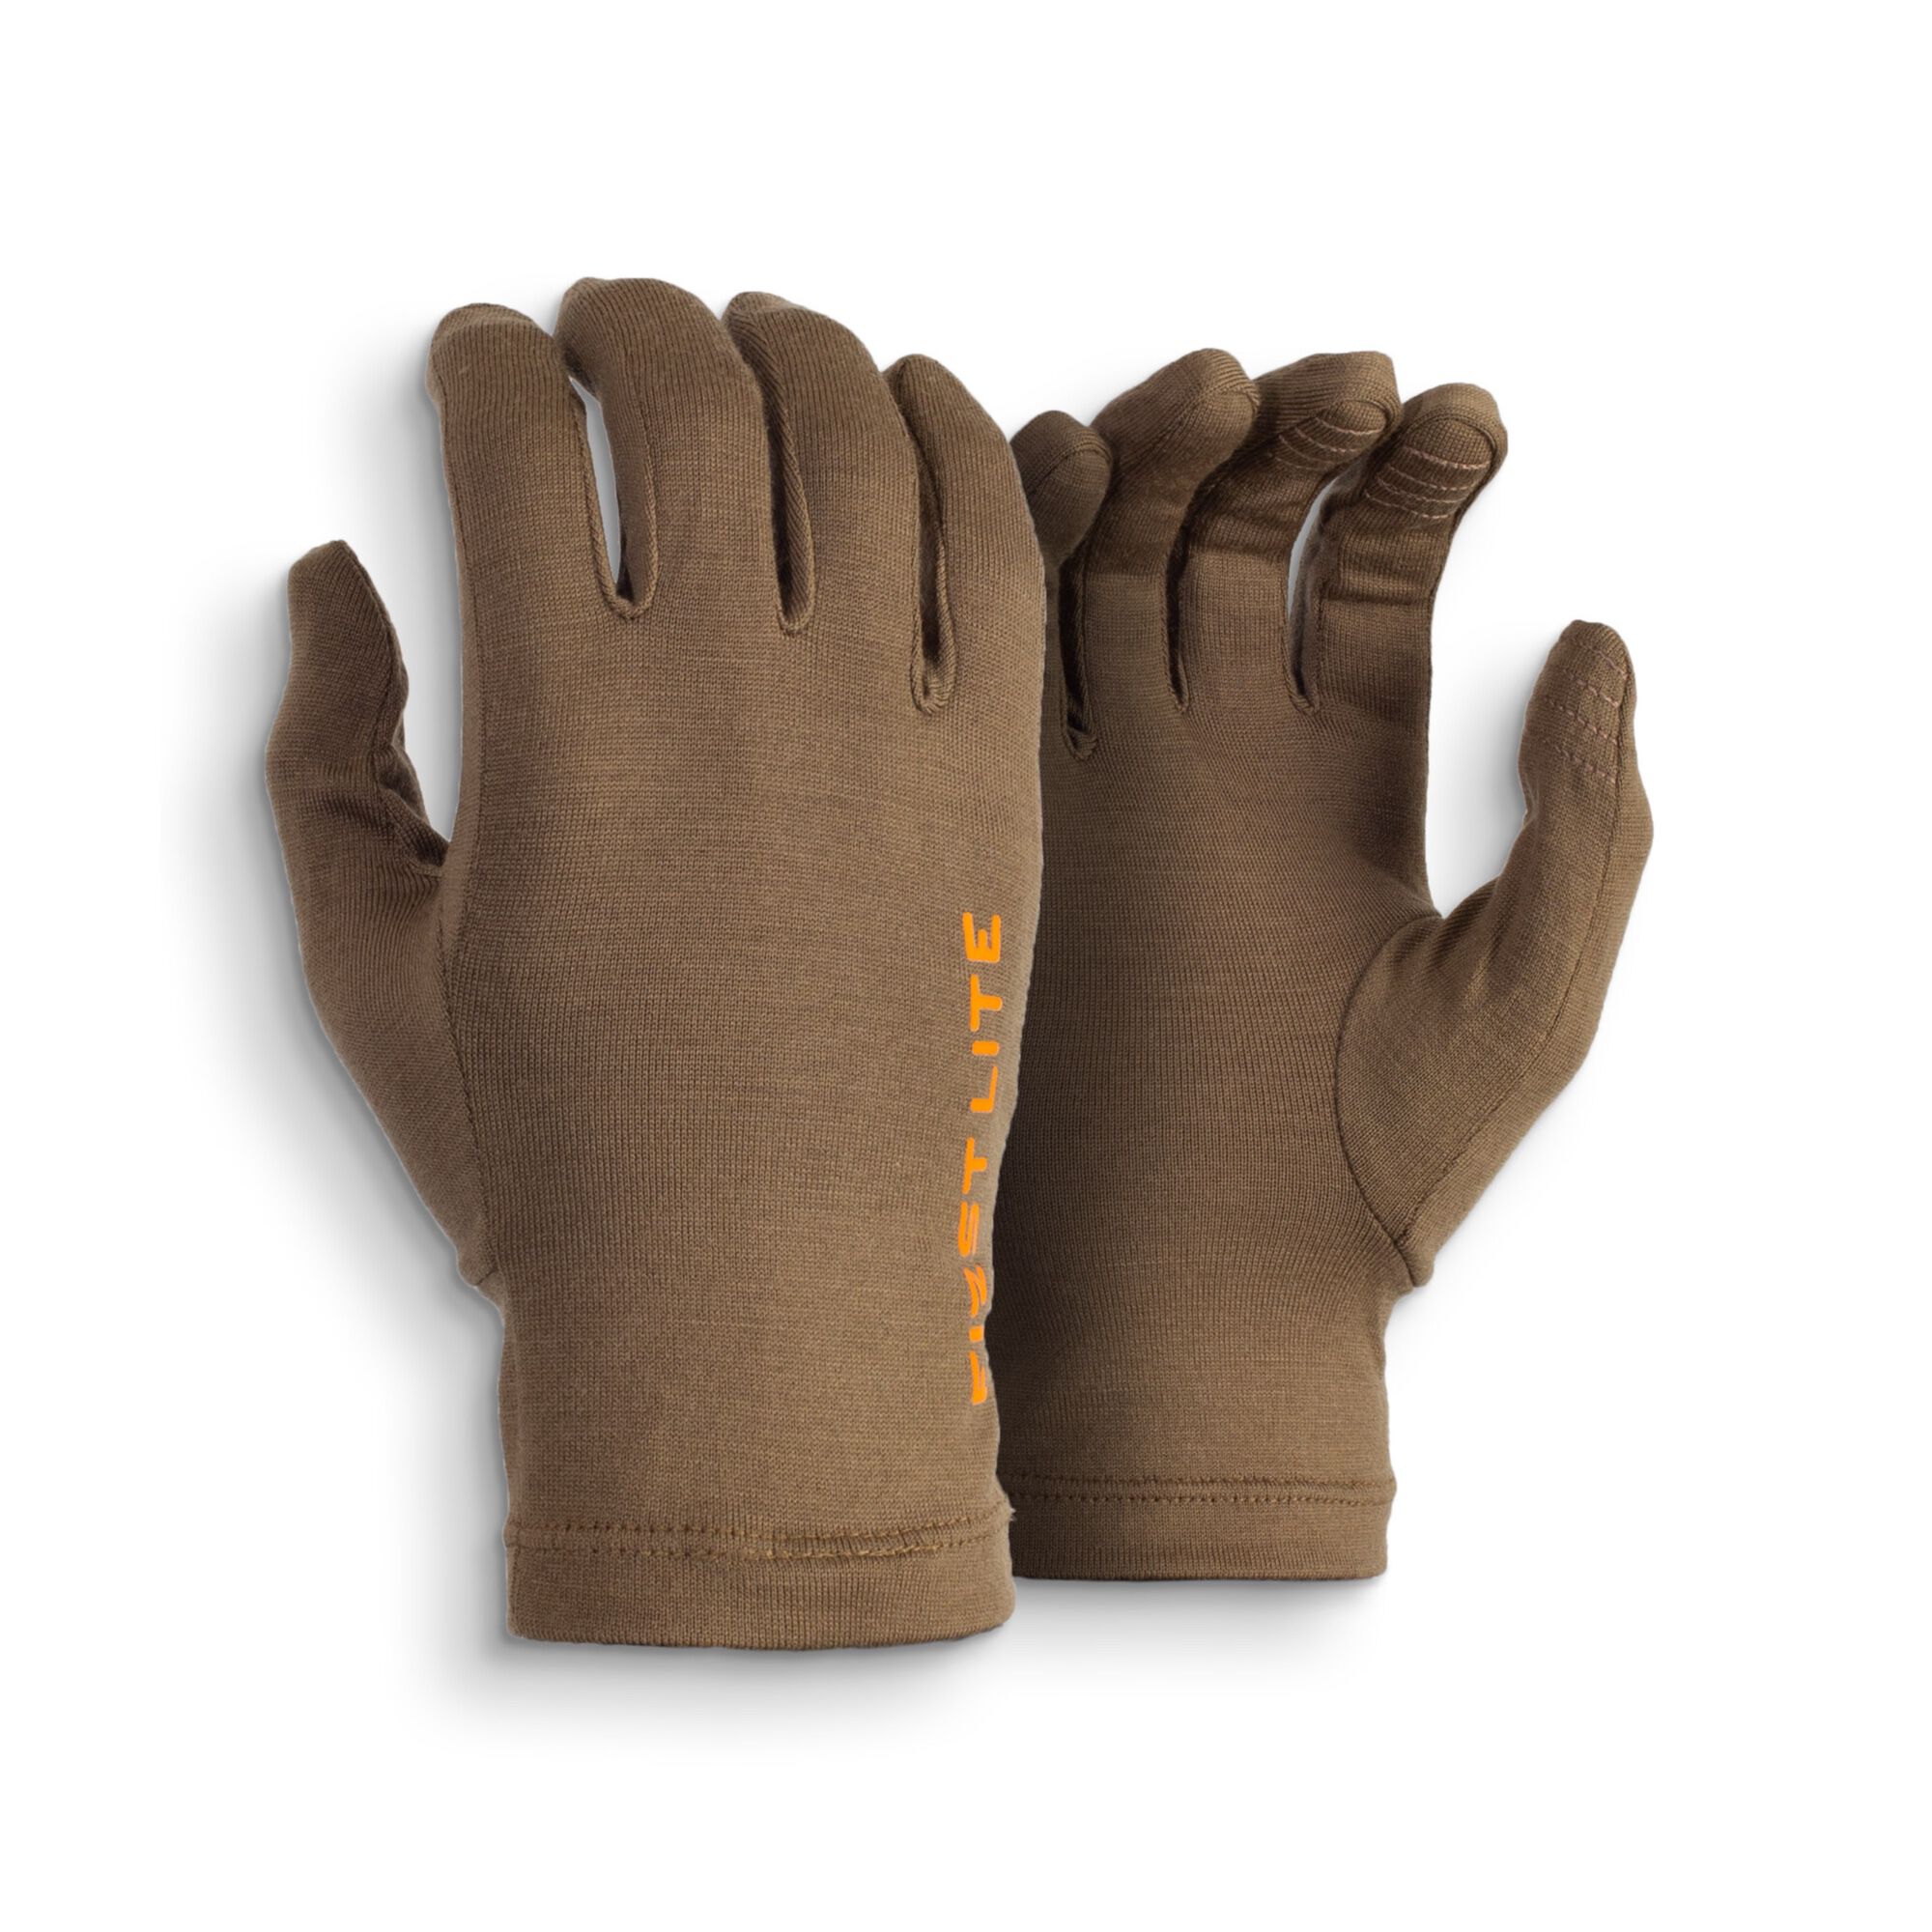 Badlands Merino Liner Glove 